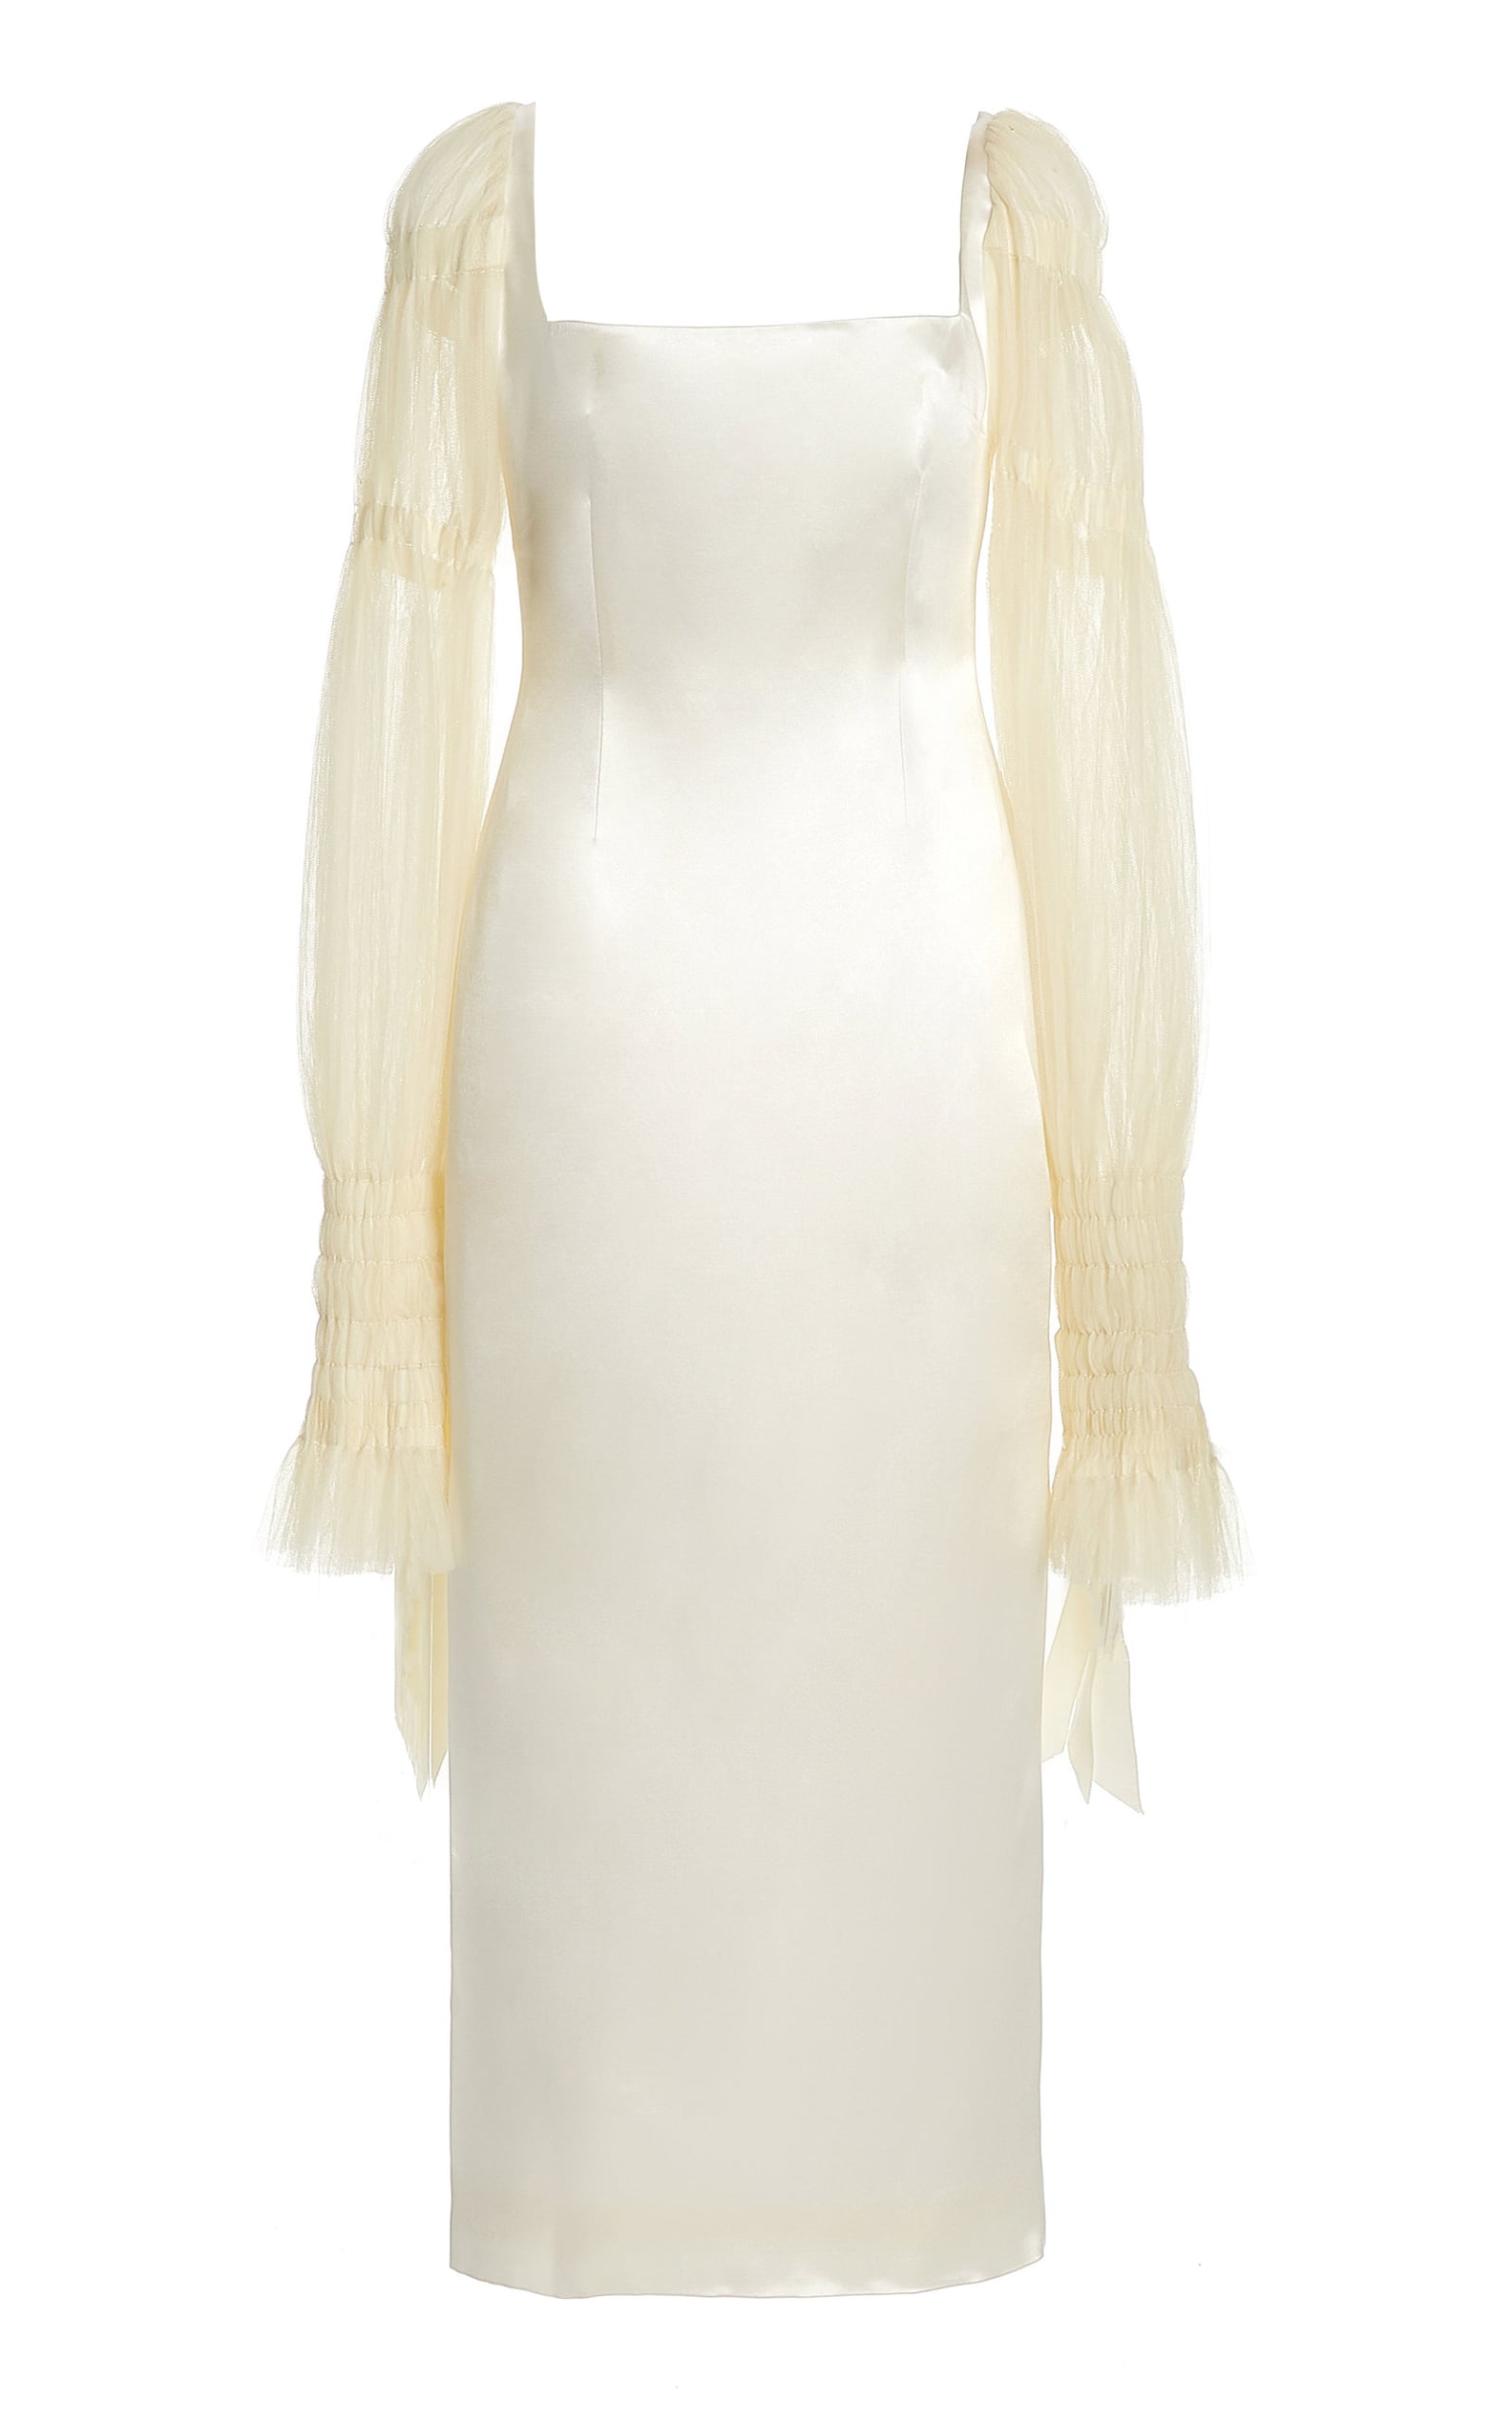 The Best Long-Sleeved Wedding Dresses | POPSUGAR Fashion